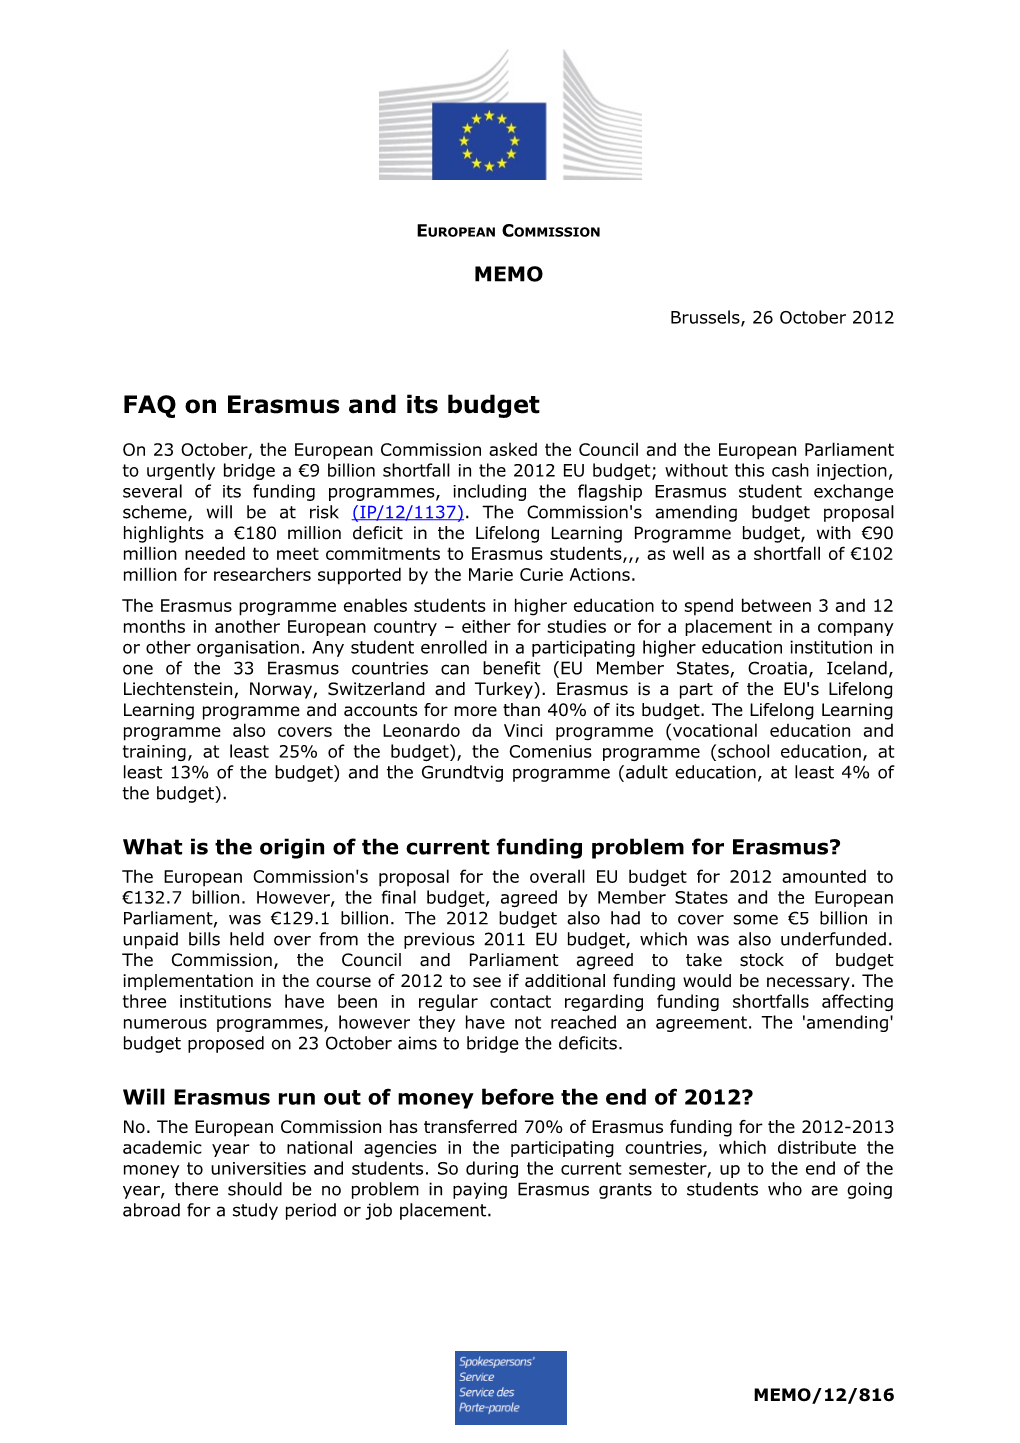 FAQ on Erasmus and Its Budget